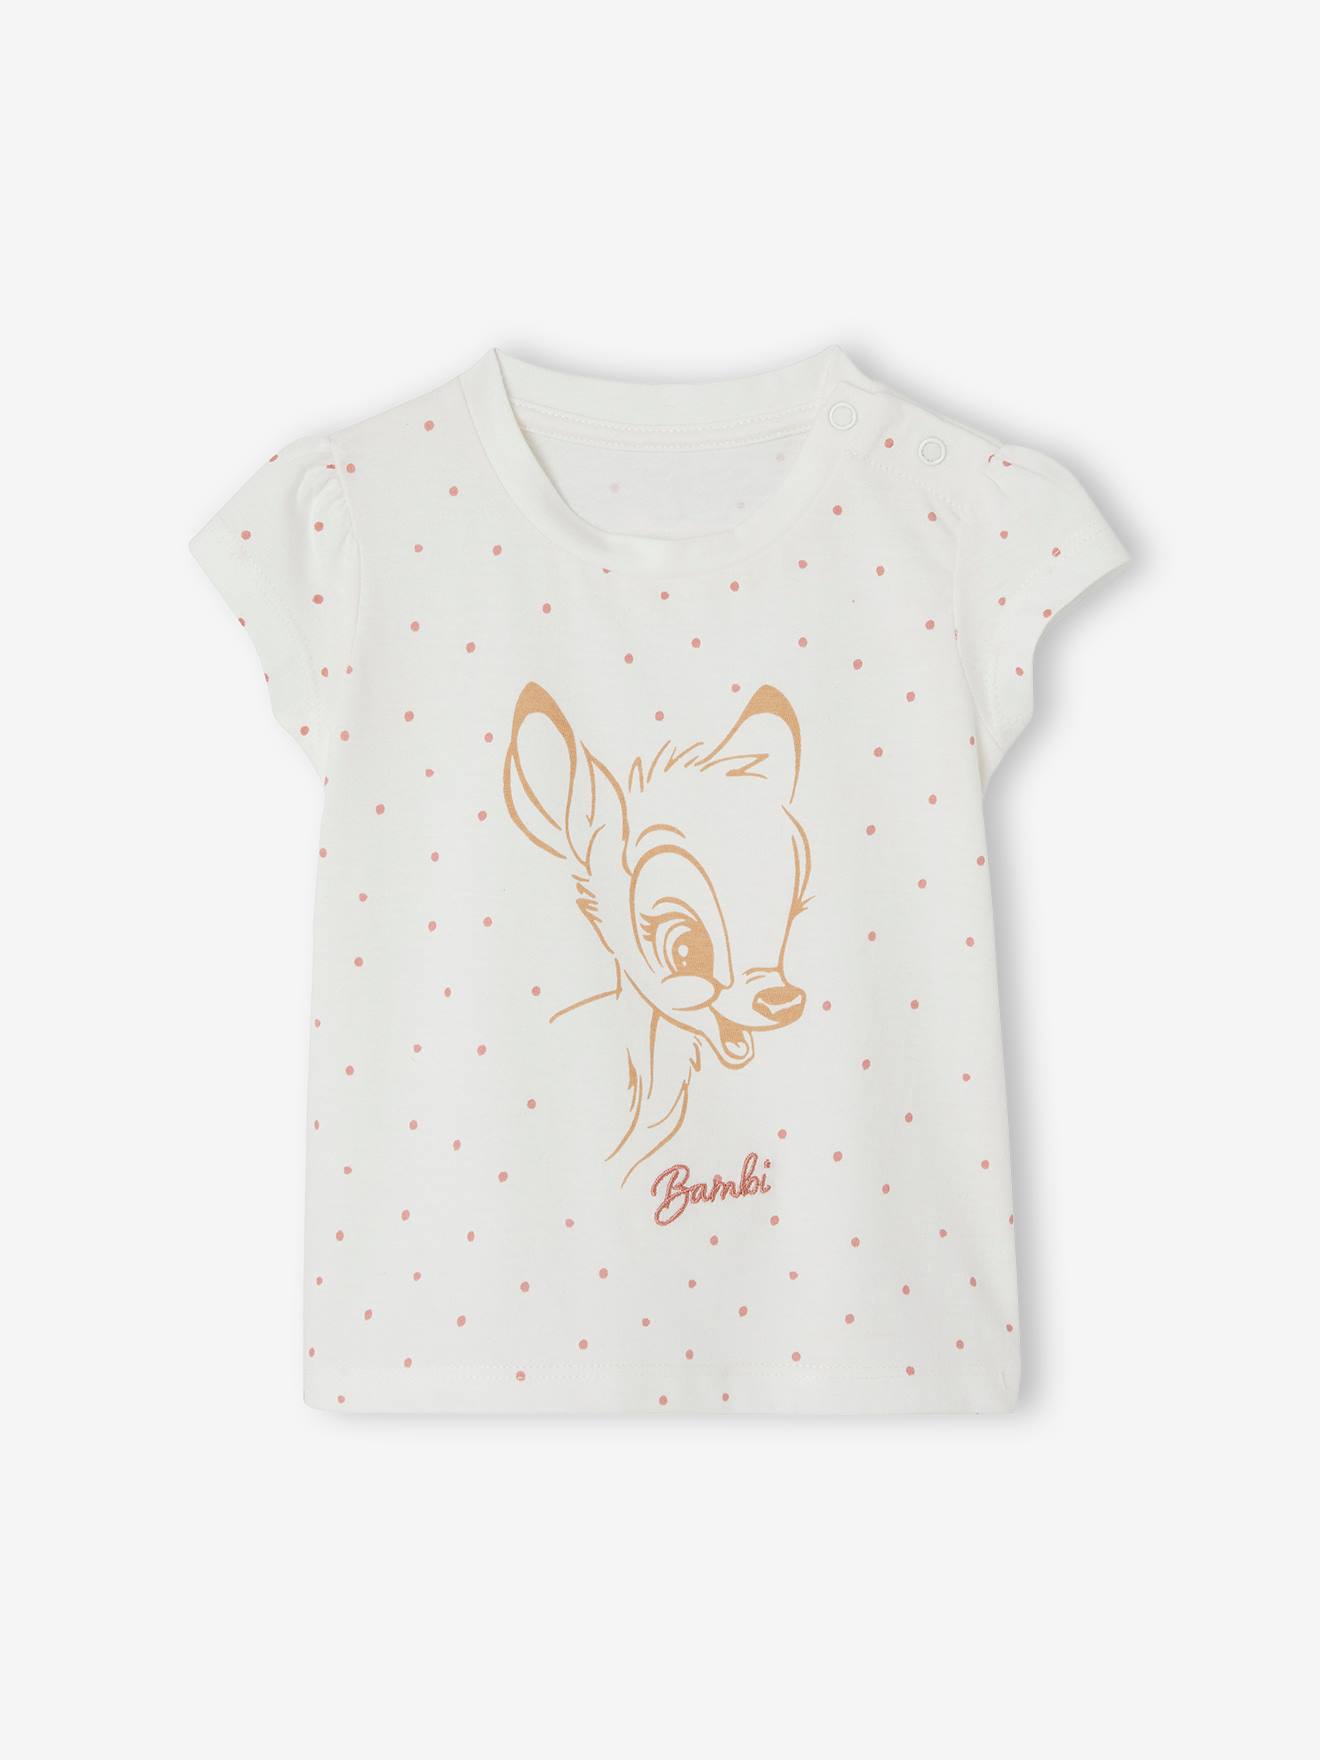 Mädchen Baby T-Shirt Disney BAMBI - weiß bedruckt, Baby